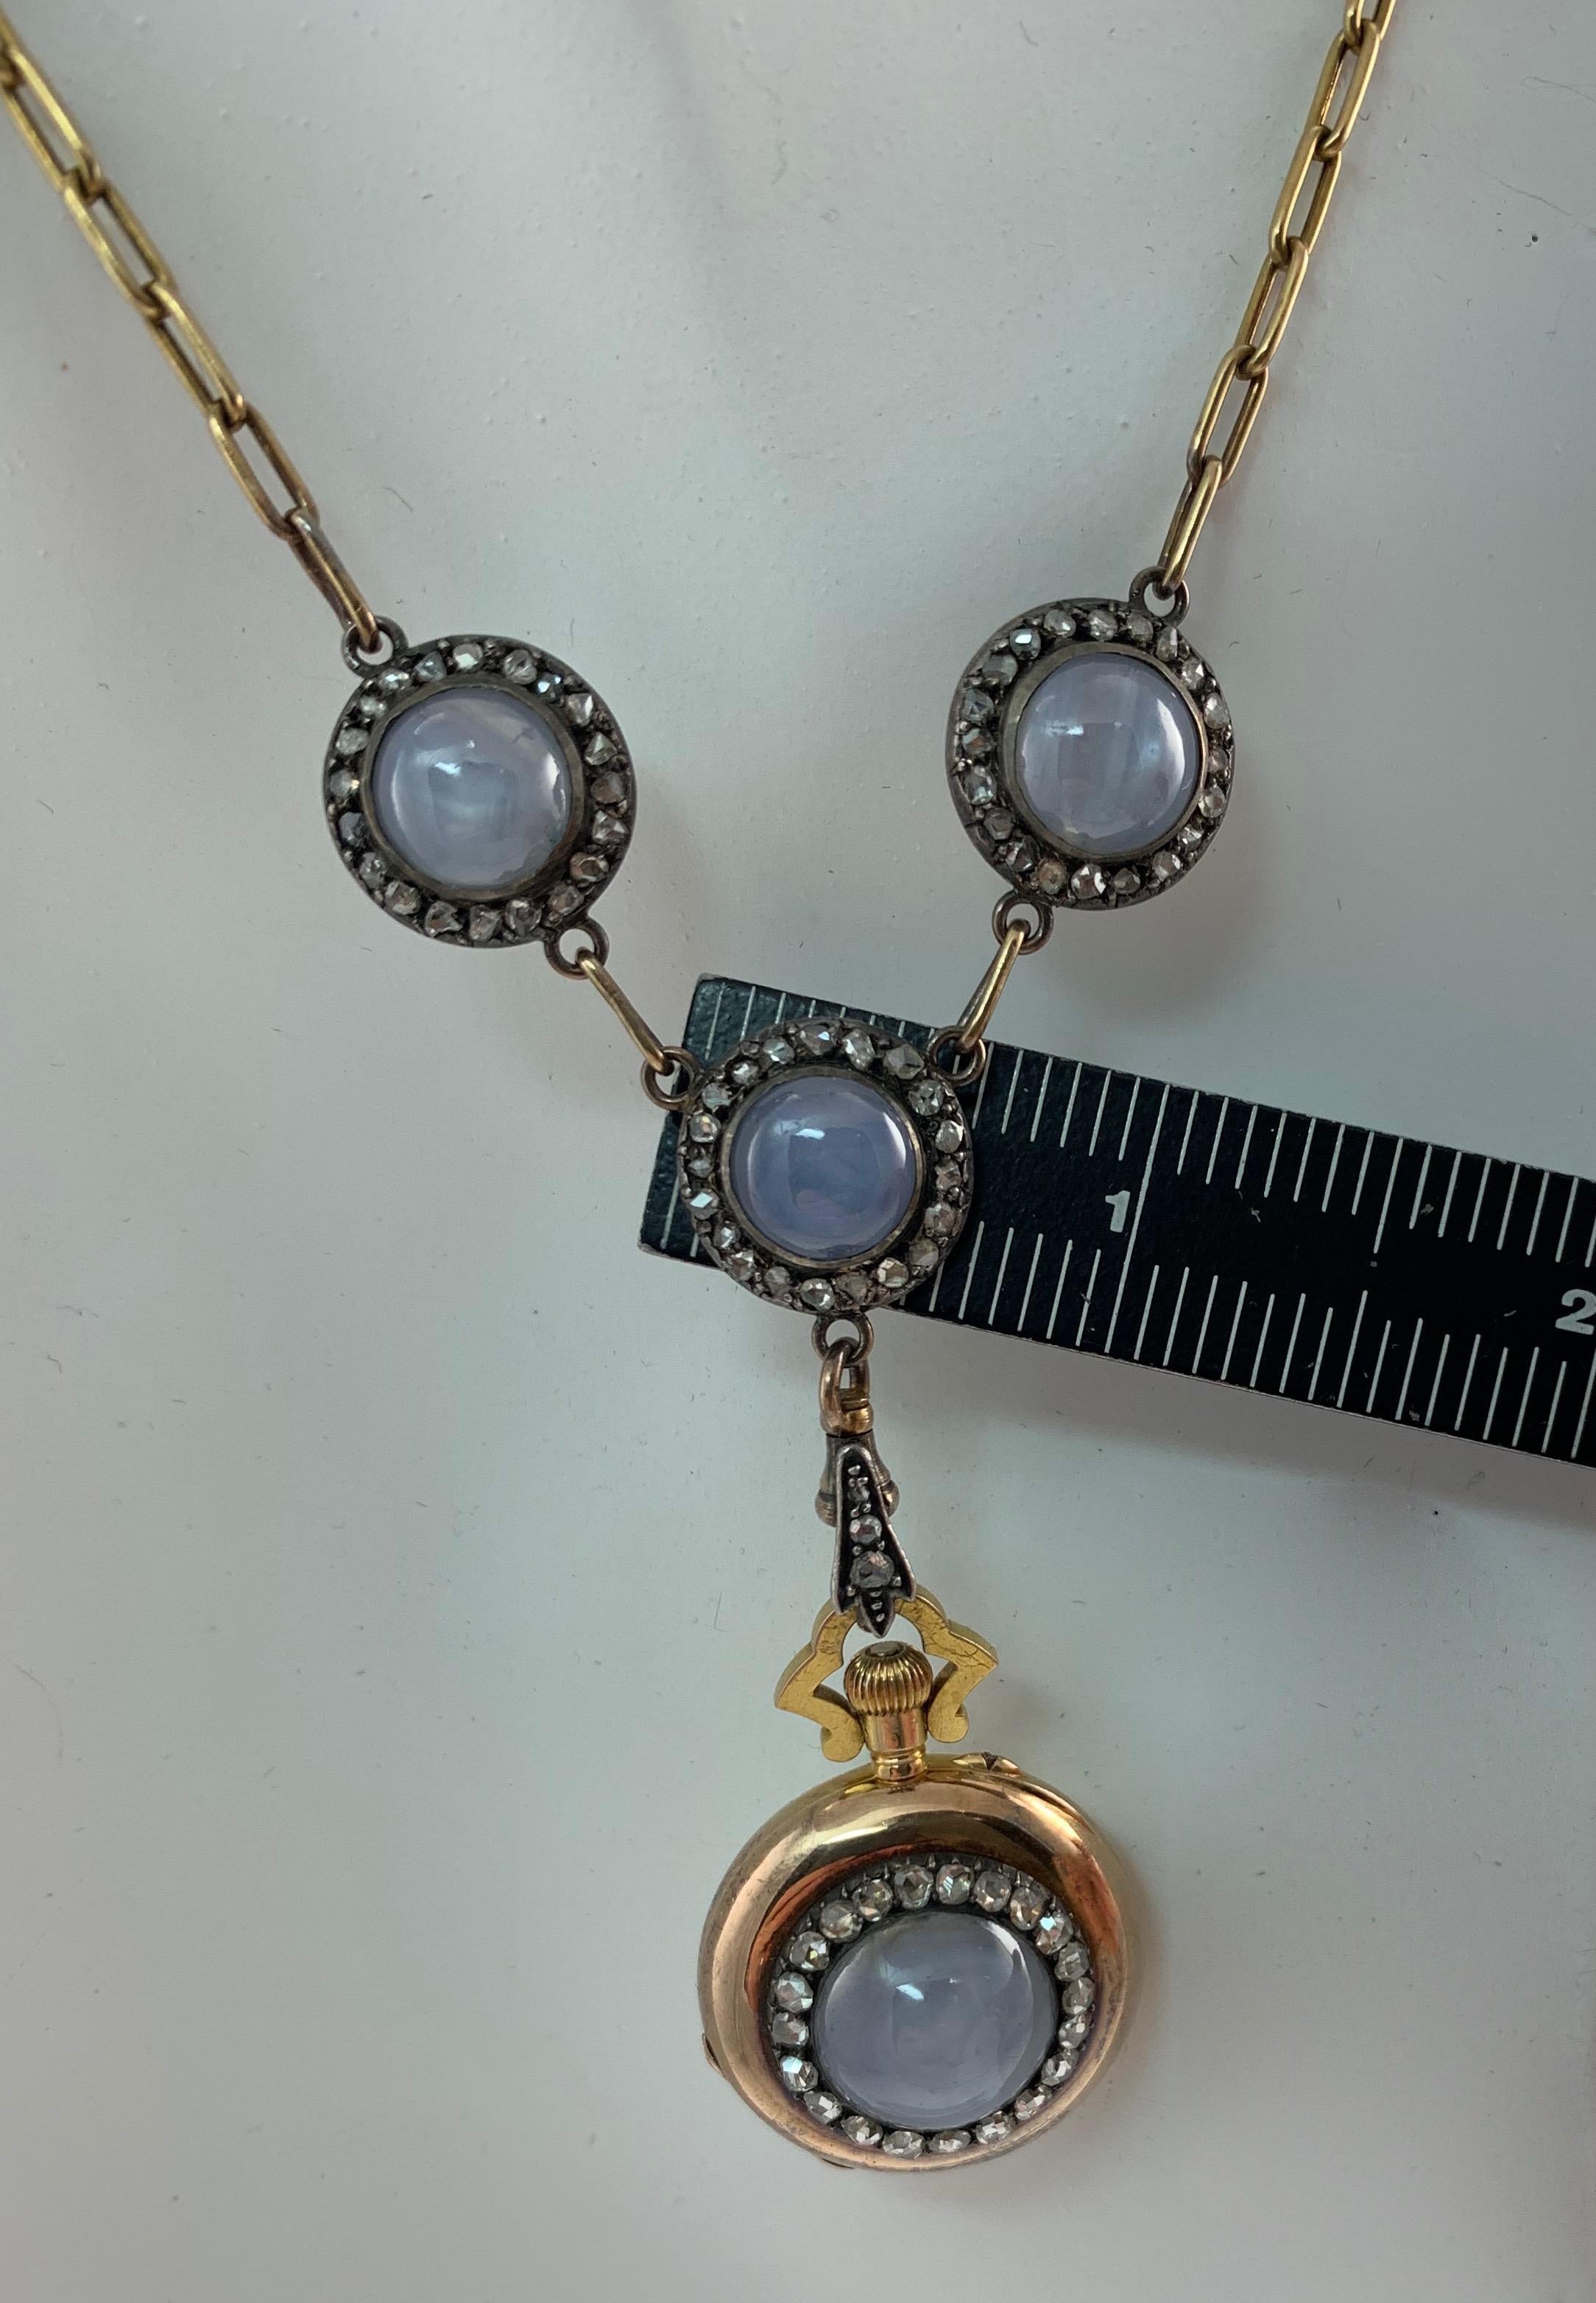 Original Boucheron Star Sapphire and Diamond Gold Necklace circa 1900 with Clock For Sale 2